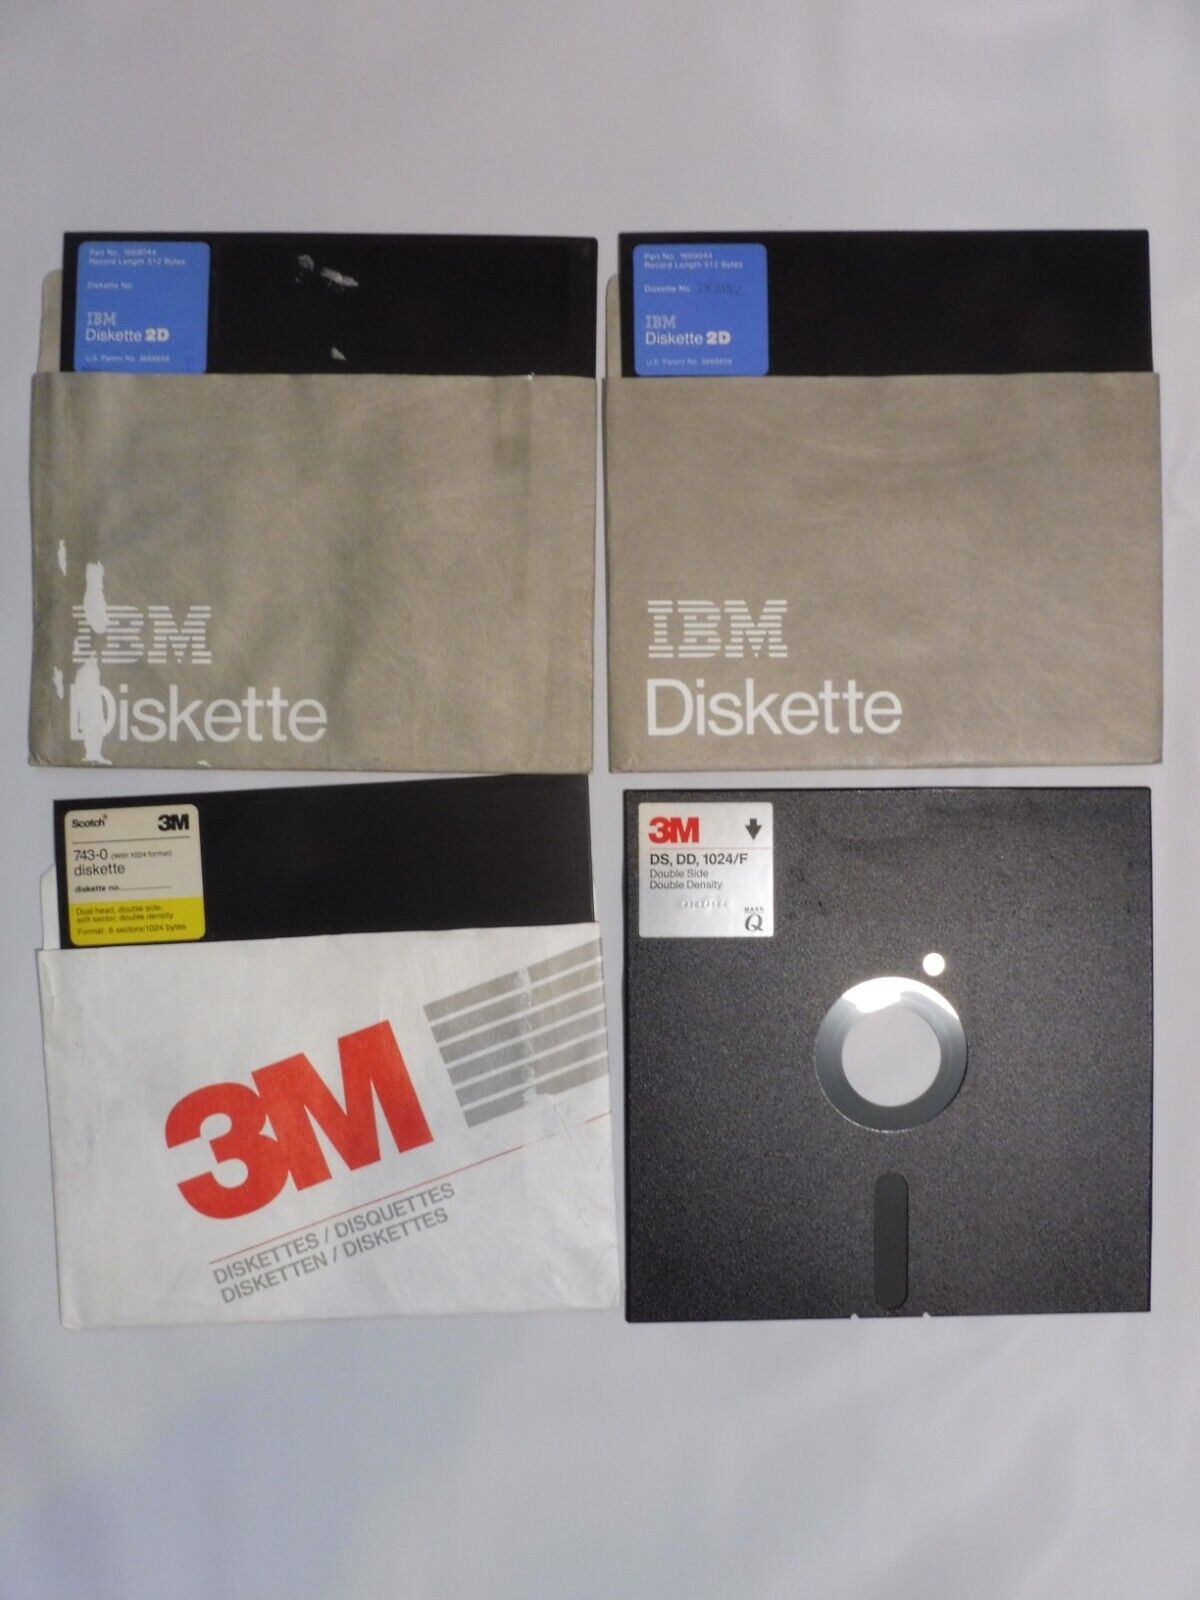 Qty 4 - 8inch floppy disk - DSDD - IBM and 3M - used - worked last used 25yr ago